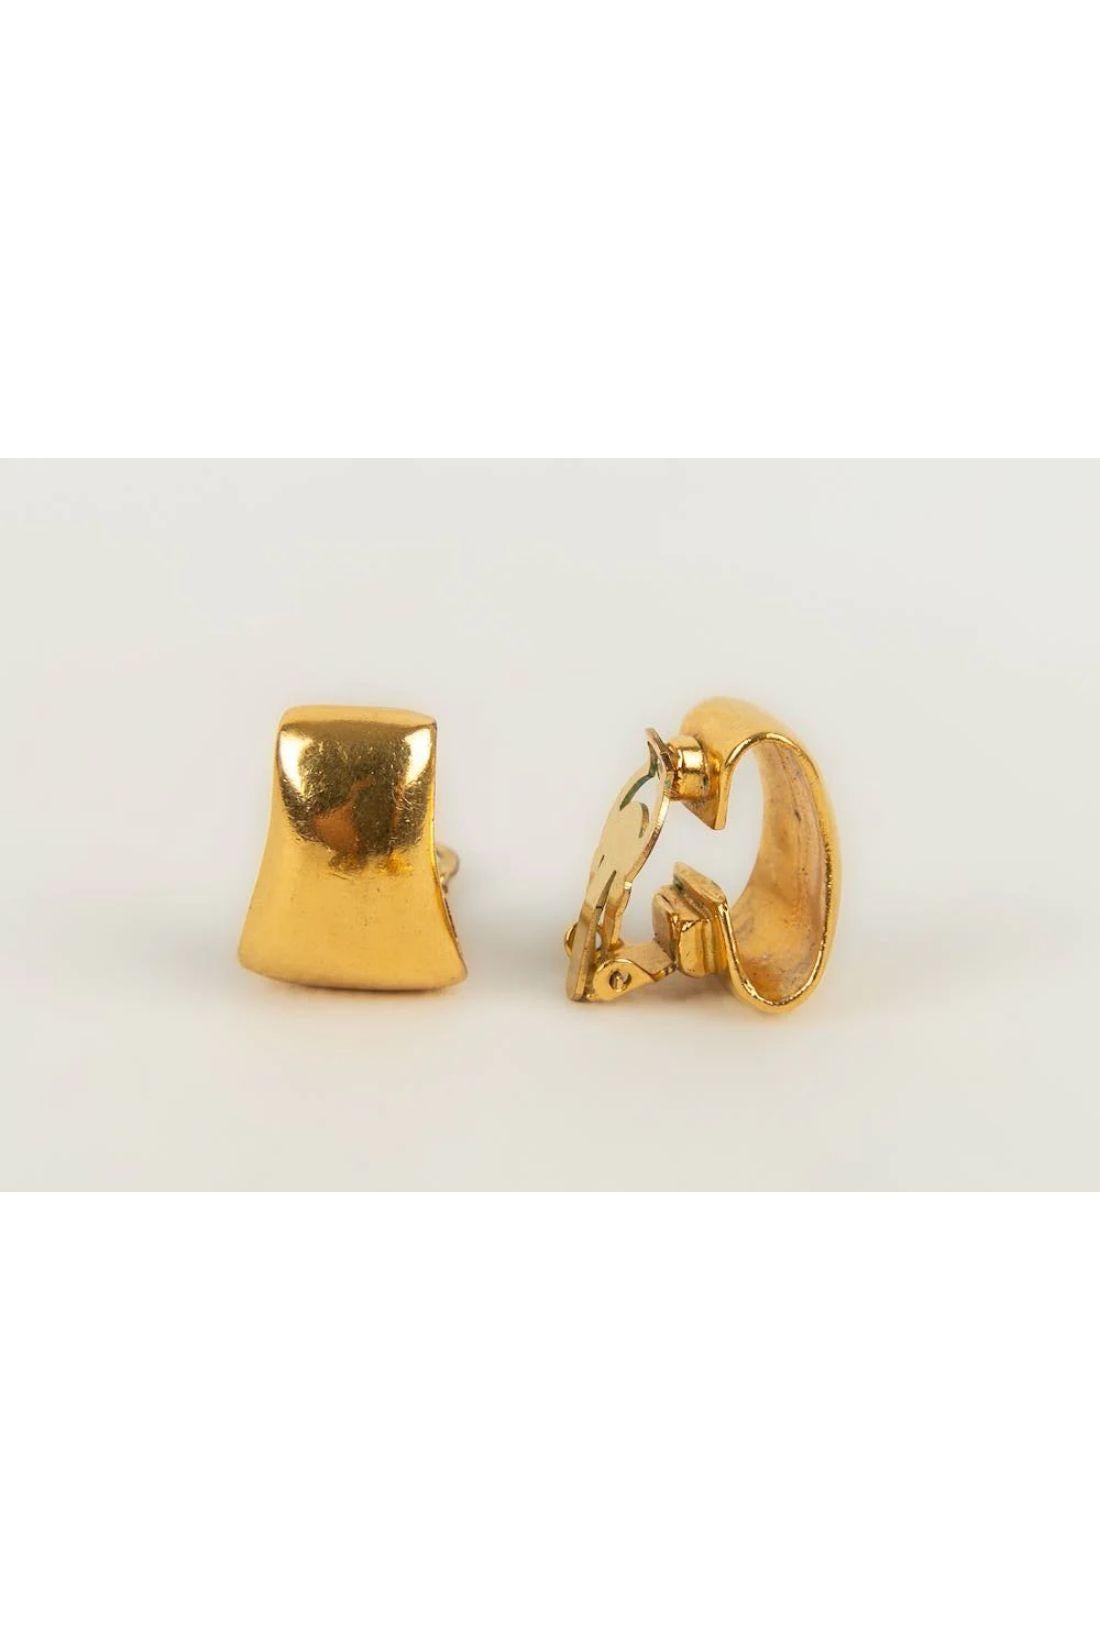 Chanel Earrings Clips in Gold Metal For Sale 1